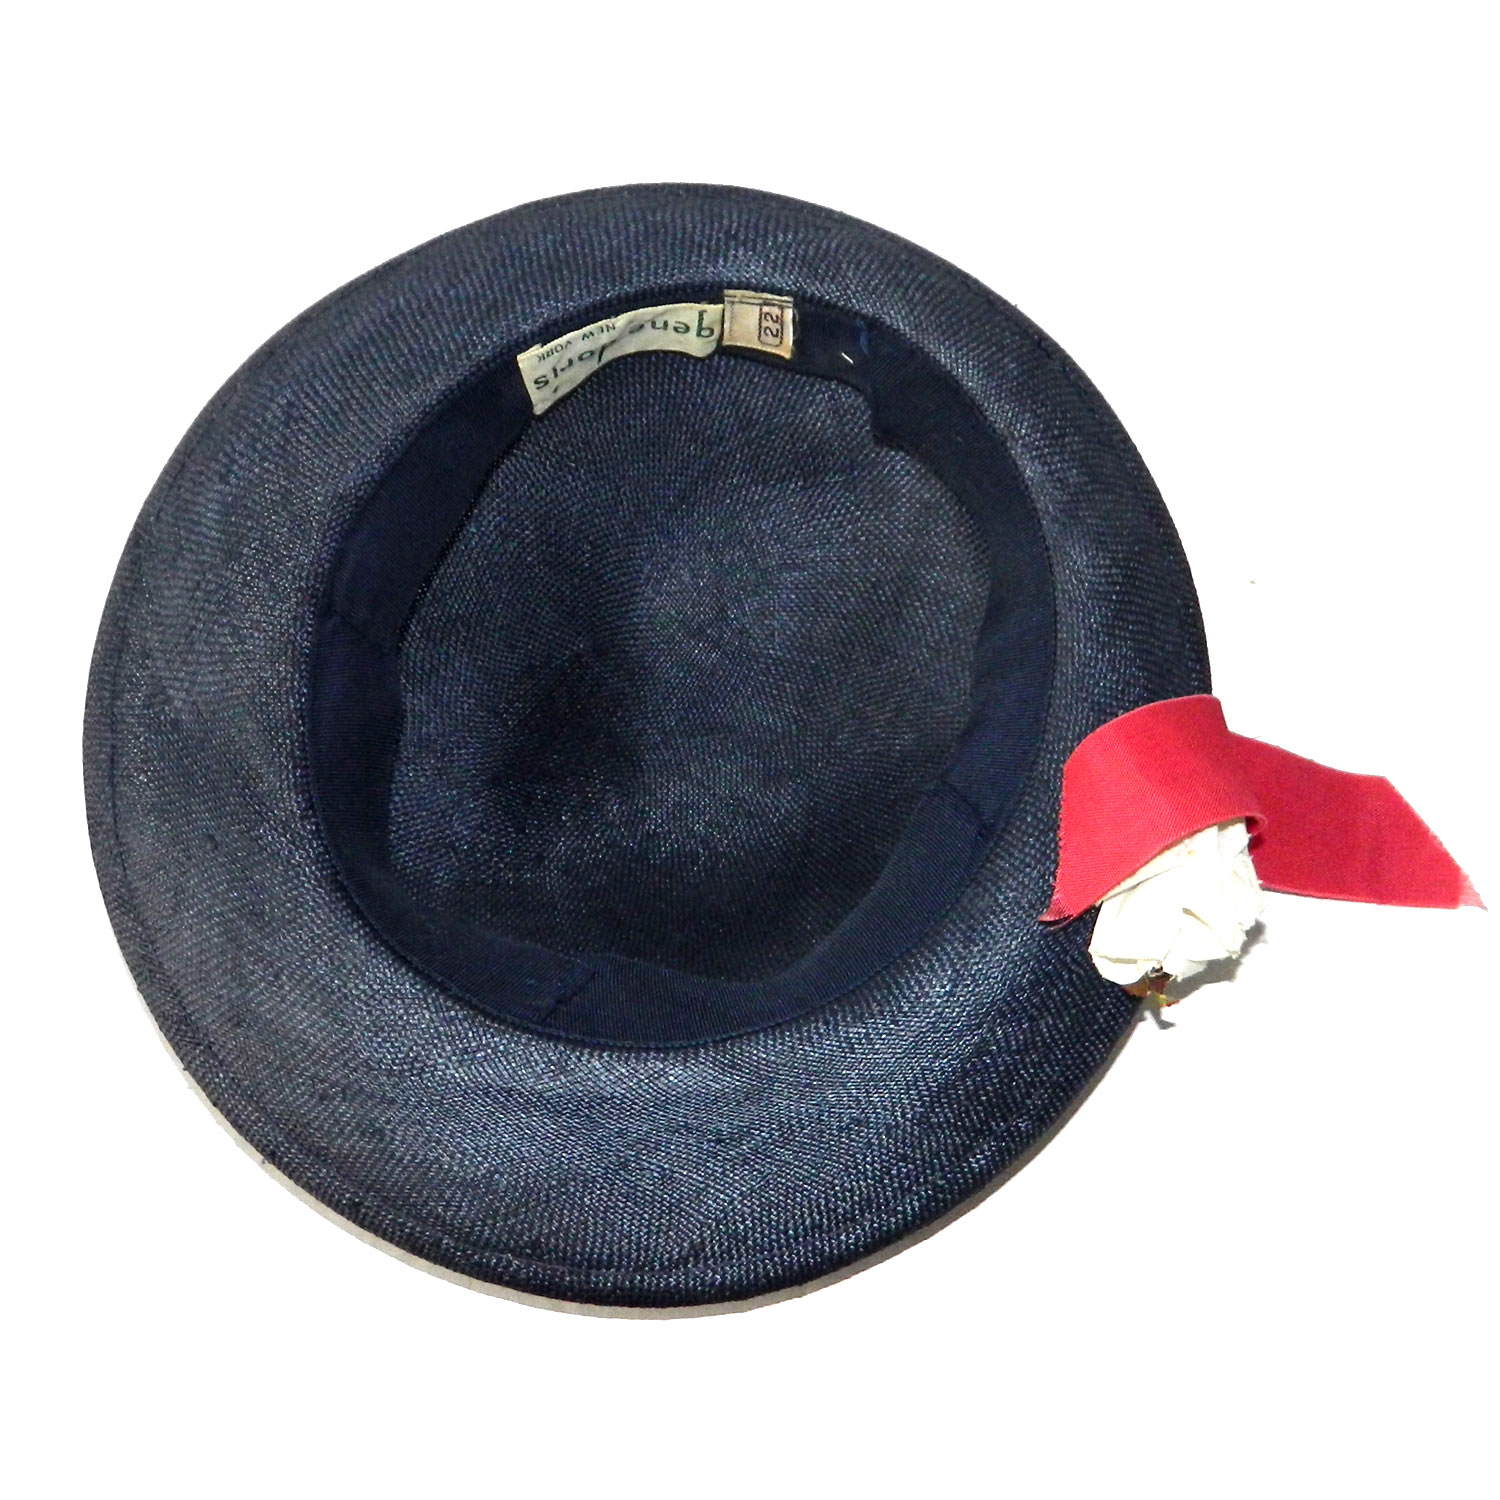 1960s blue straw hat